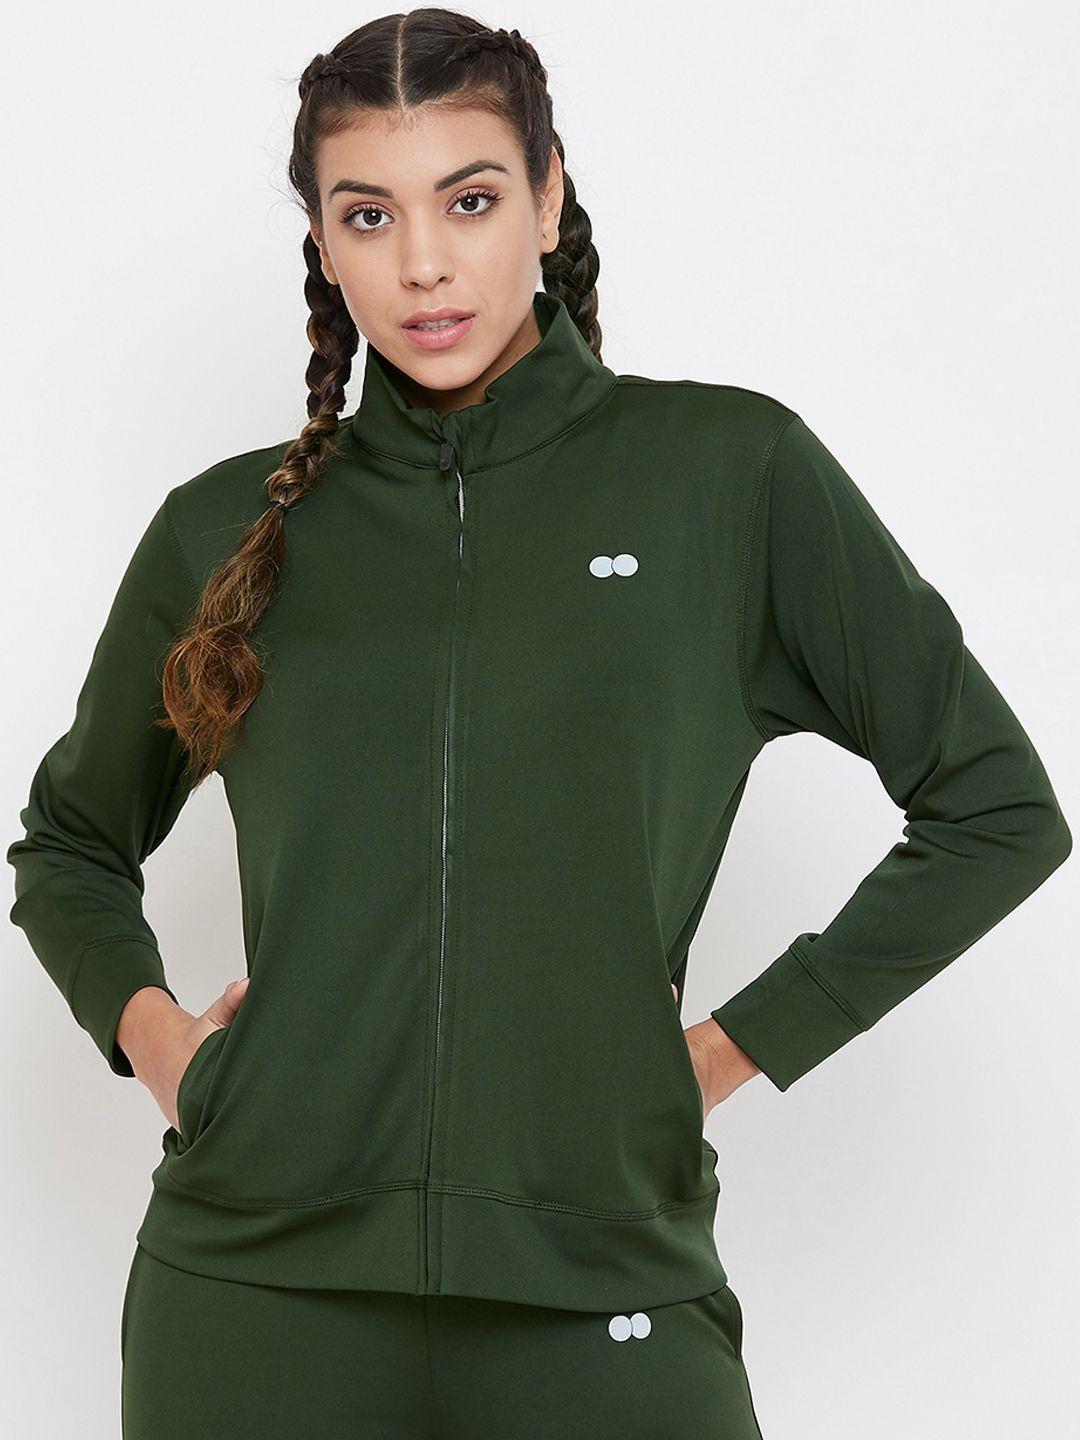 clovia women green solid sweatshirt